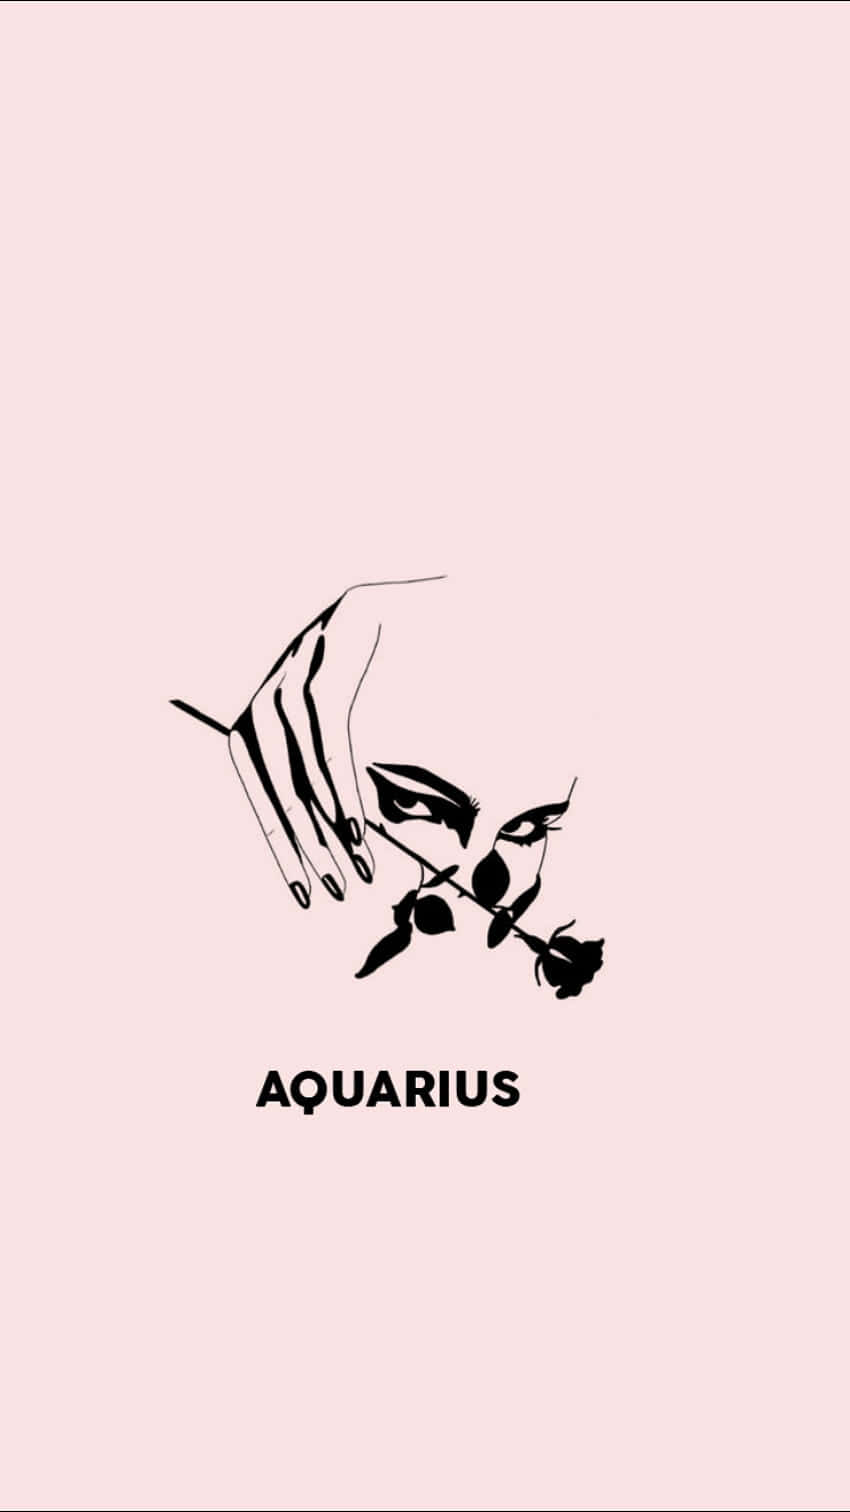 Aquarius - A Hand Holding A Flower Wallpaper